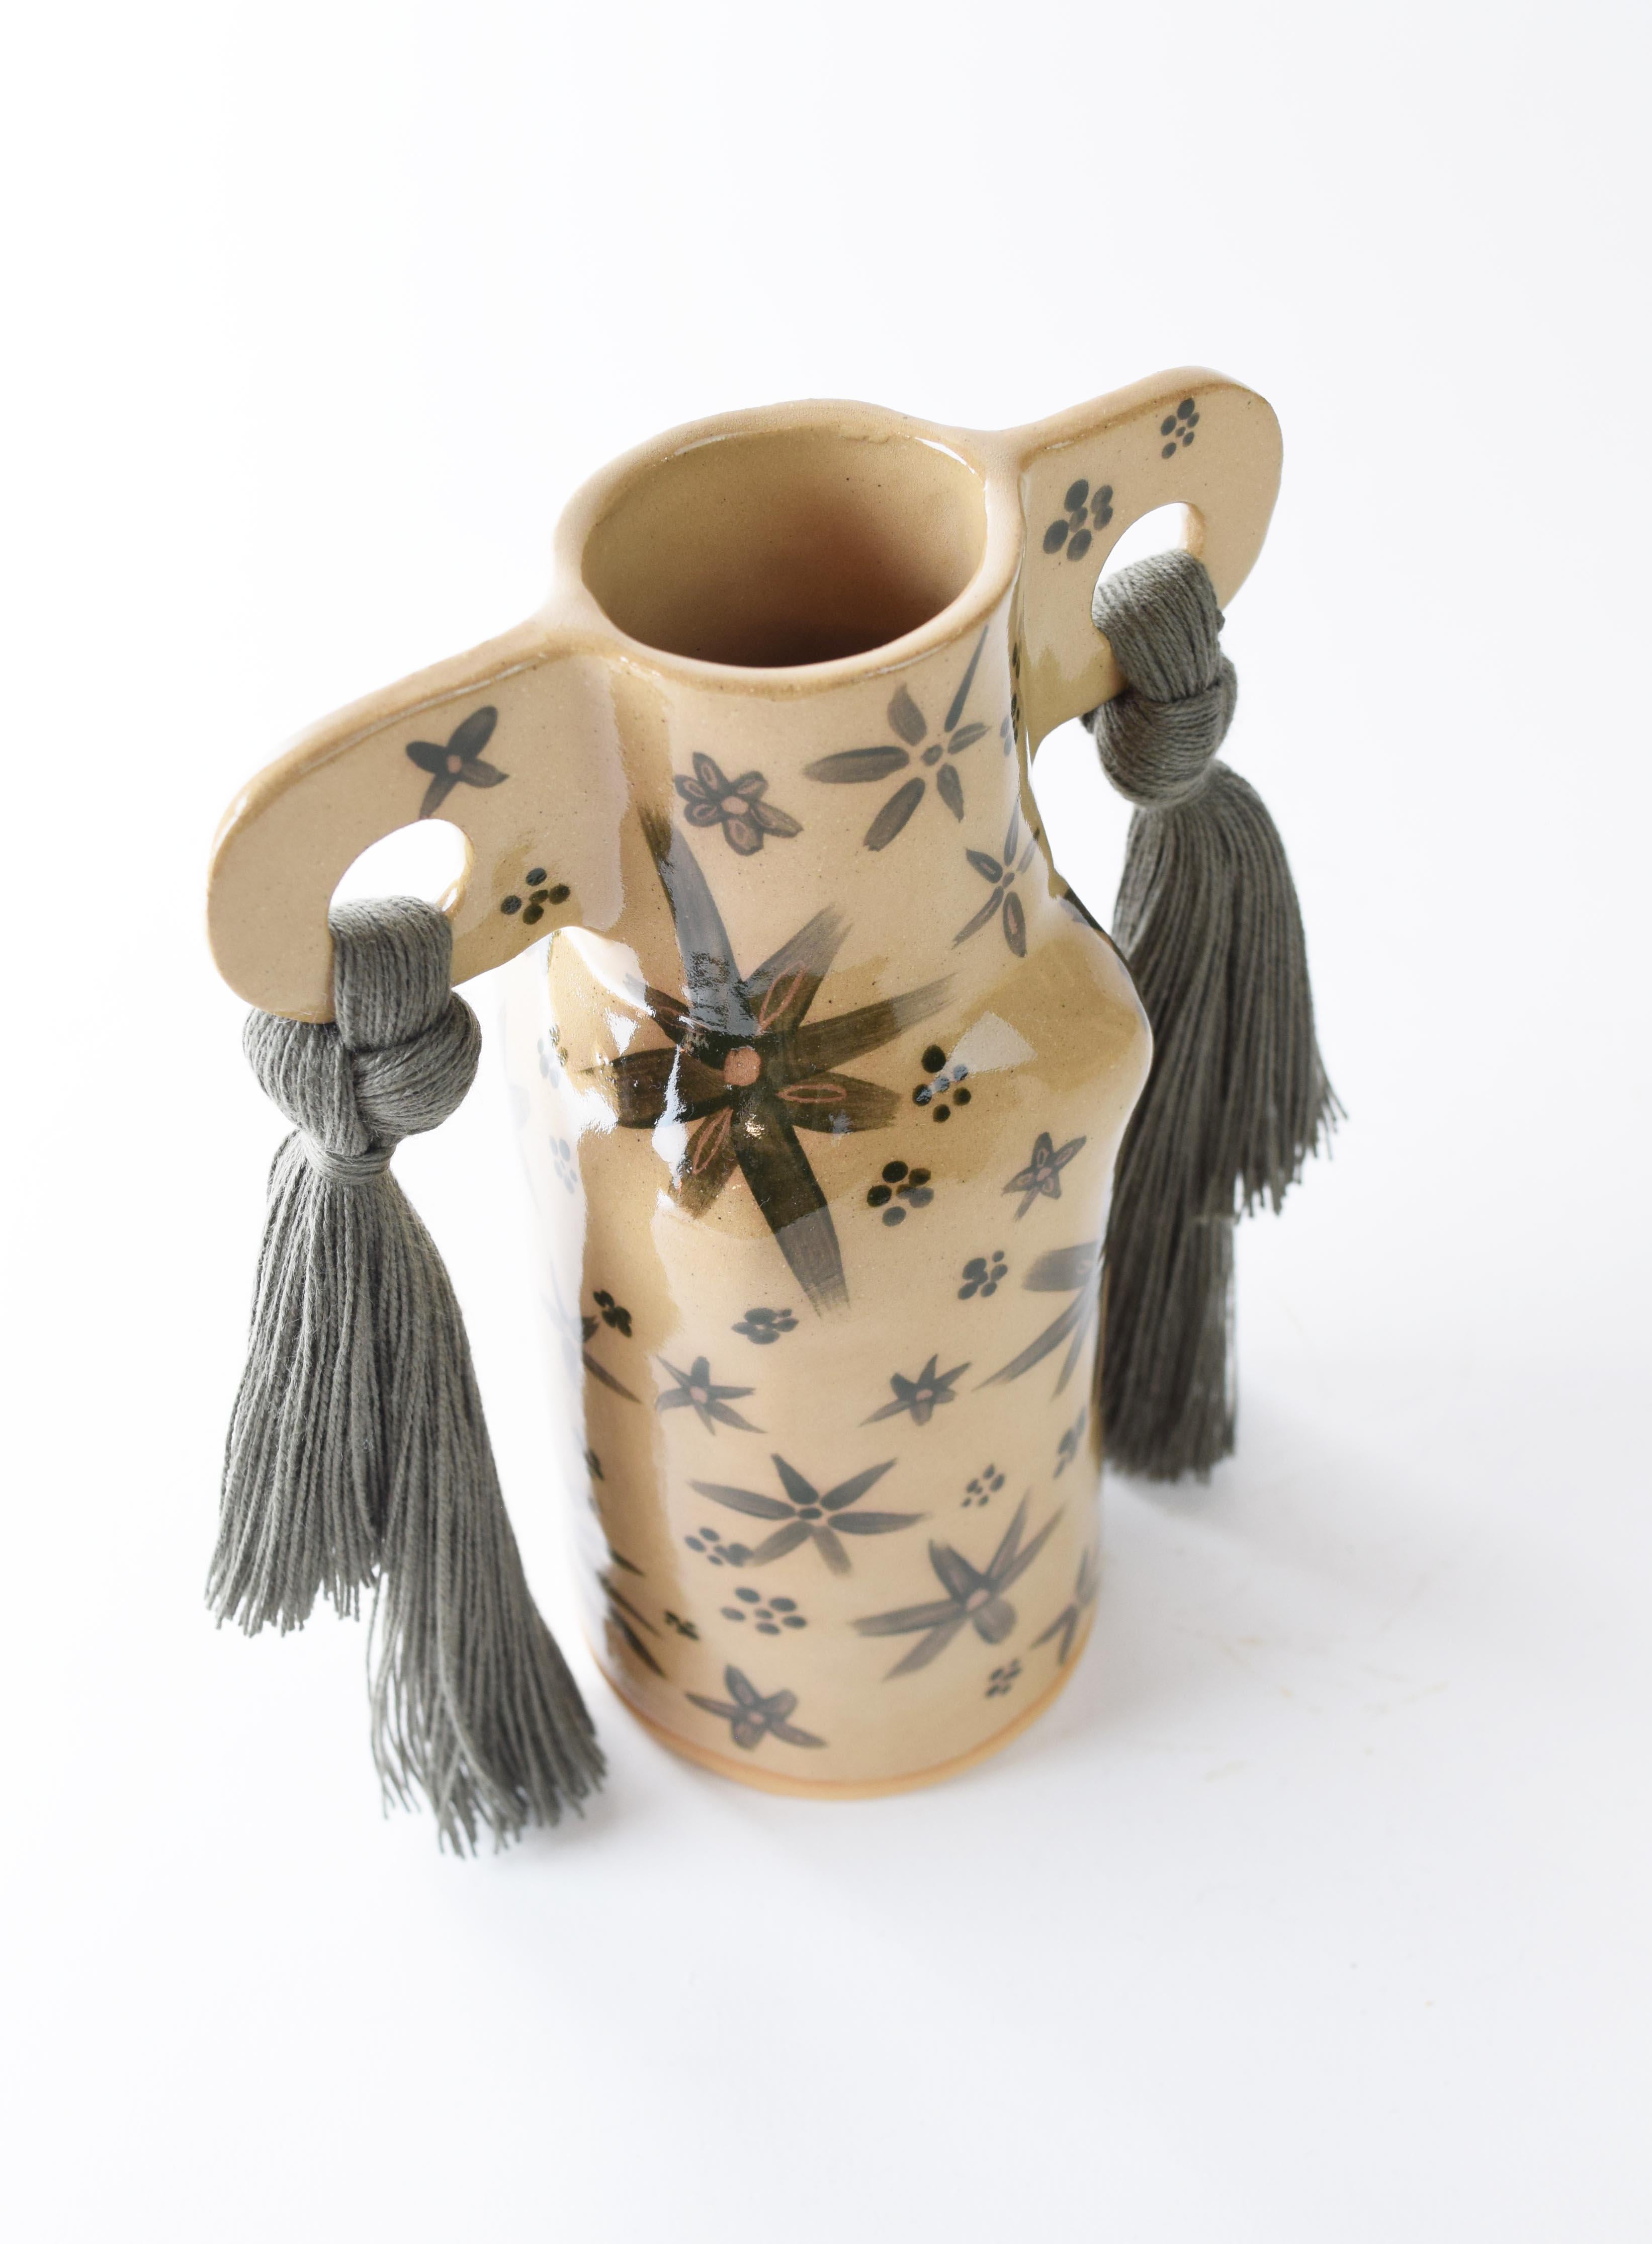 Hand-Knotted OOAK Handmade Ceramic Vase #606 - Olive Green Hand Glazed Floral & Cotton Braid